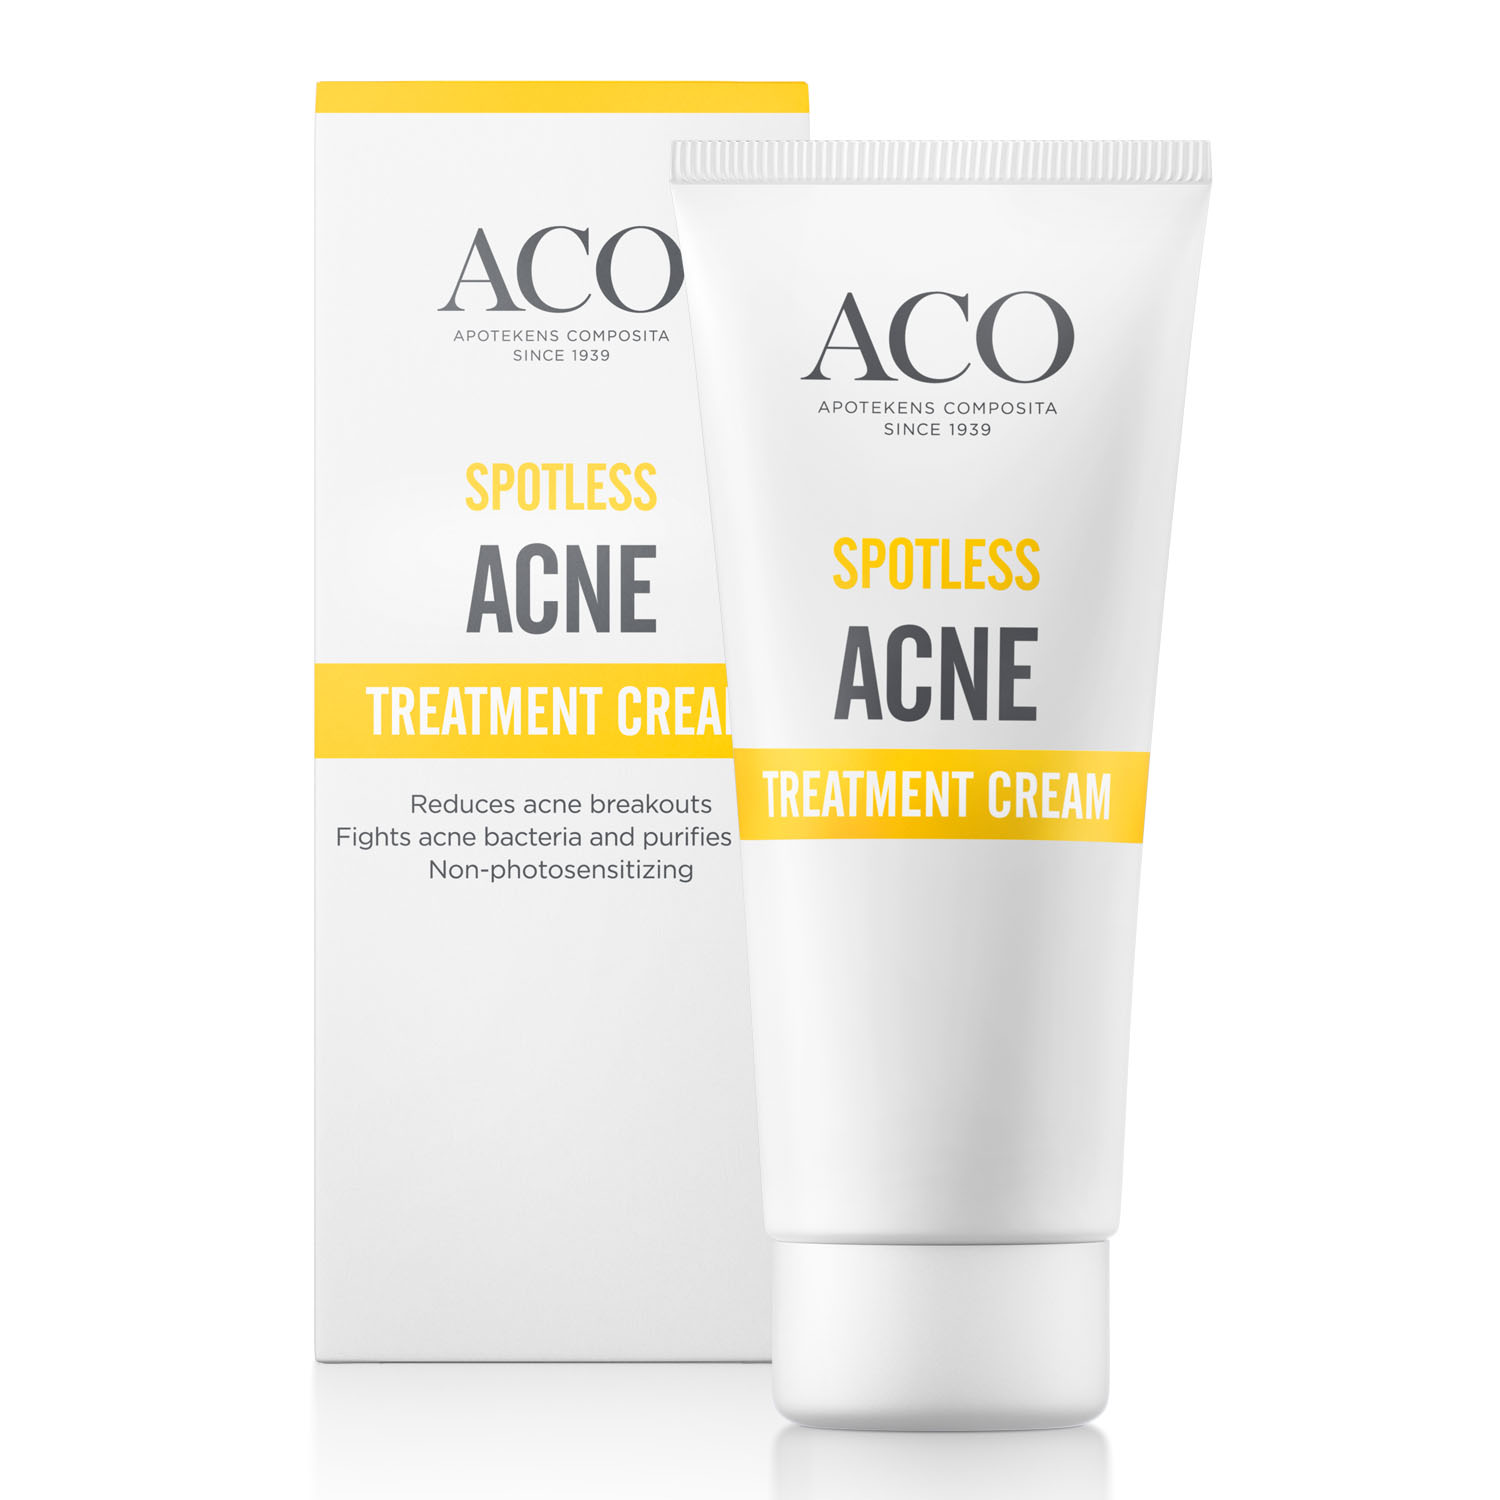 ACO Spotless Acne Skin Treatment Cream, 30 gram